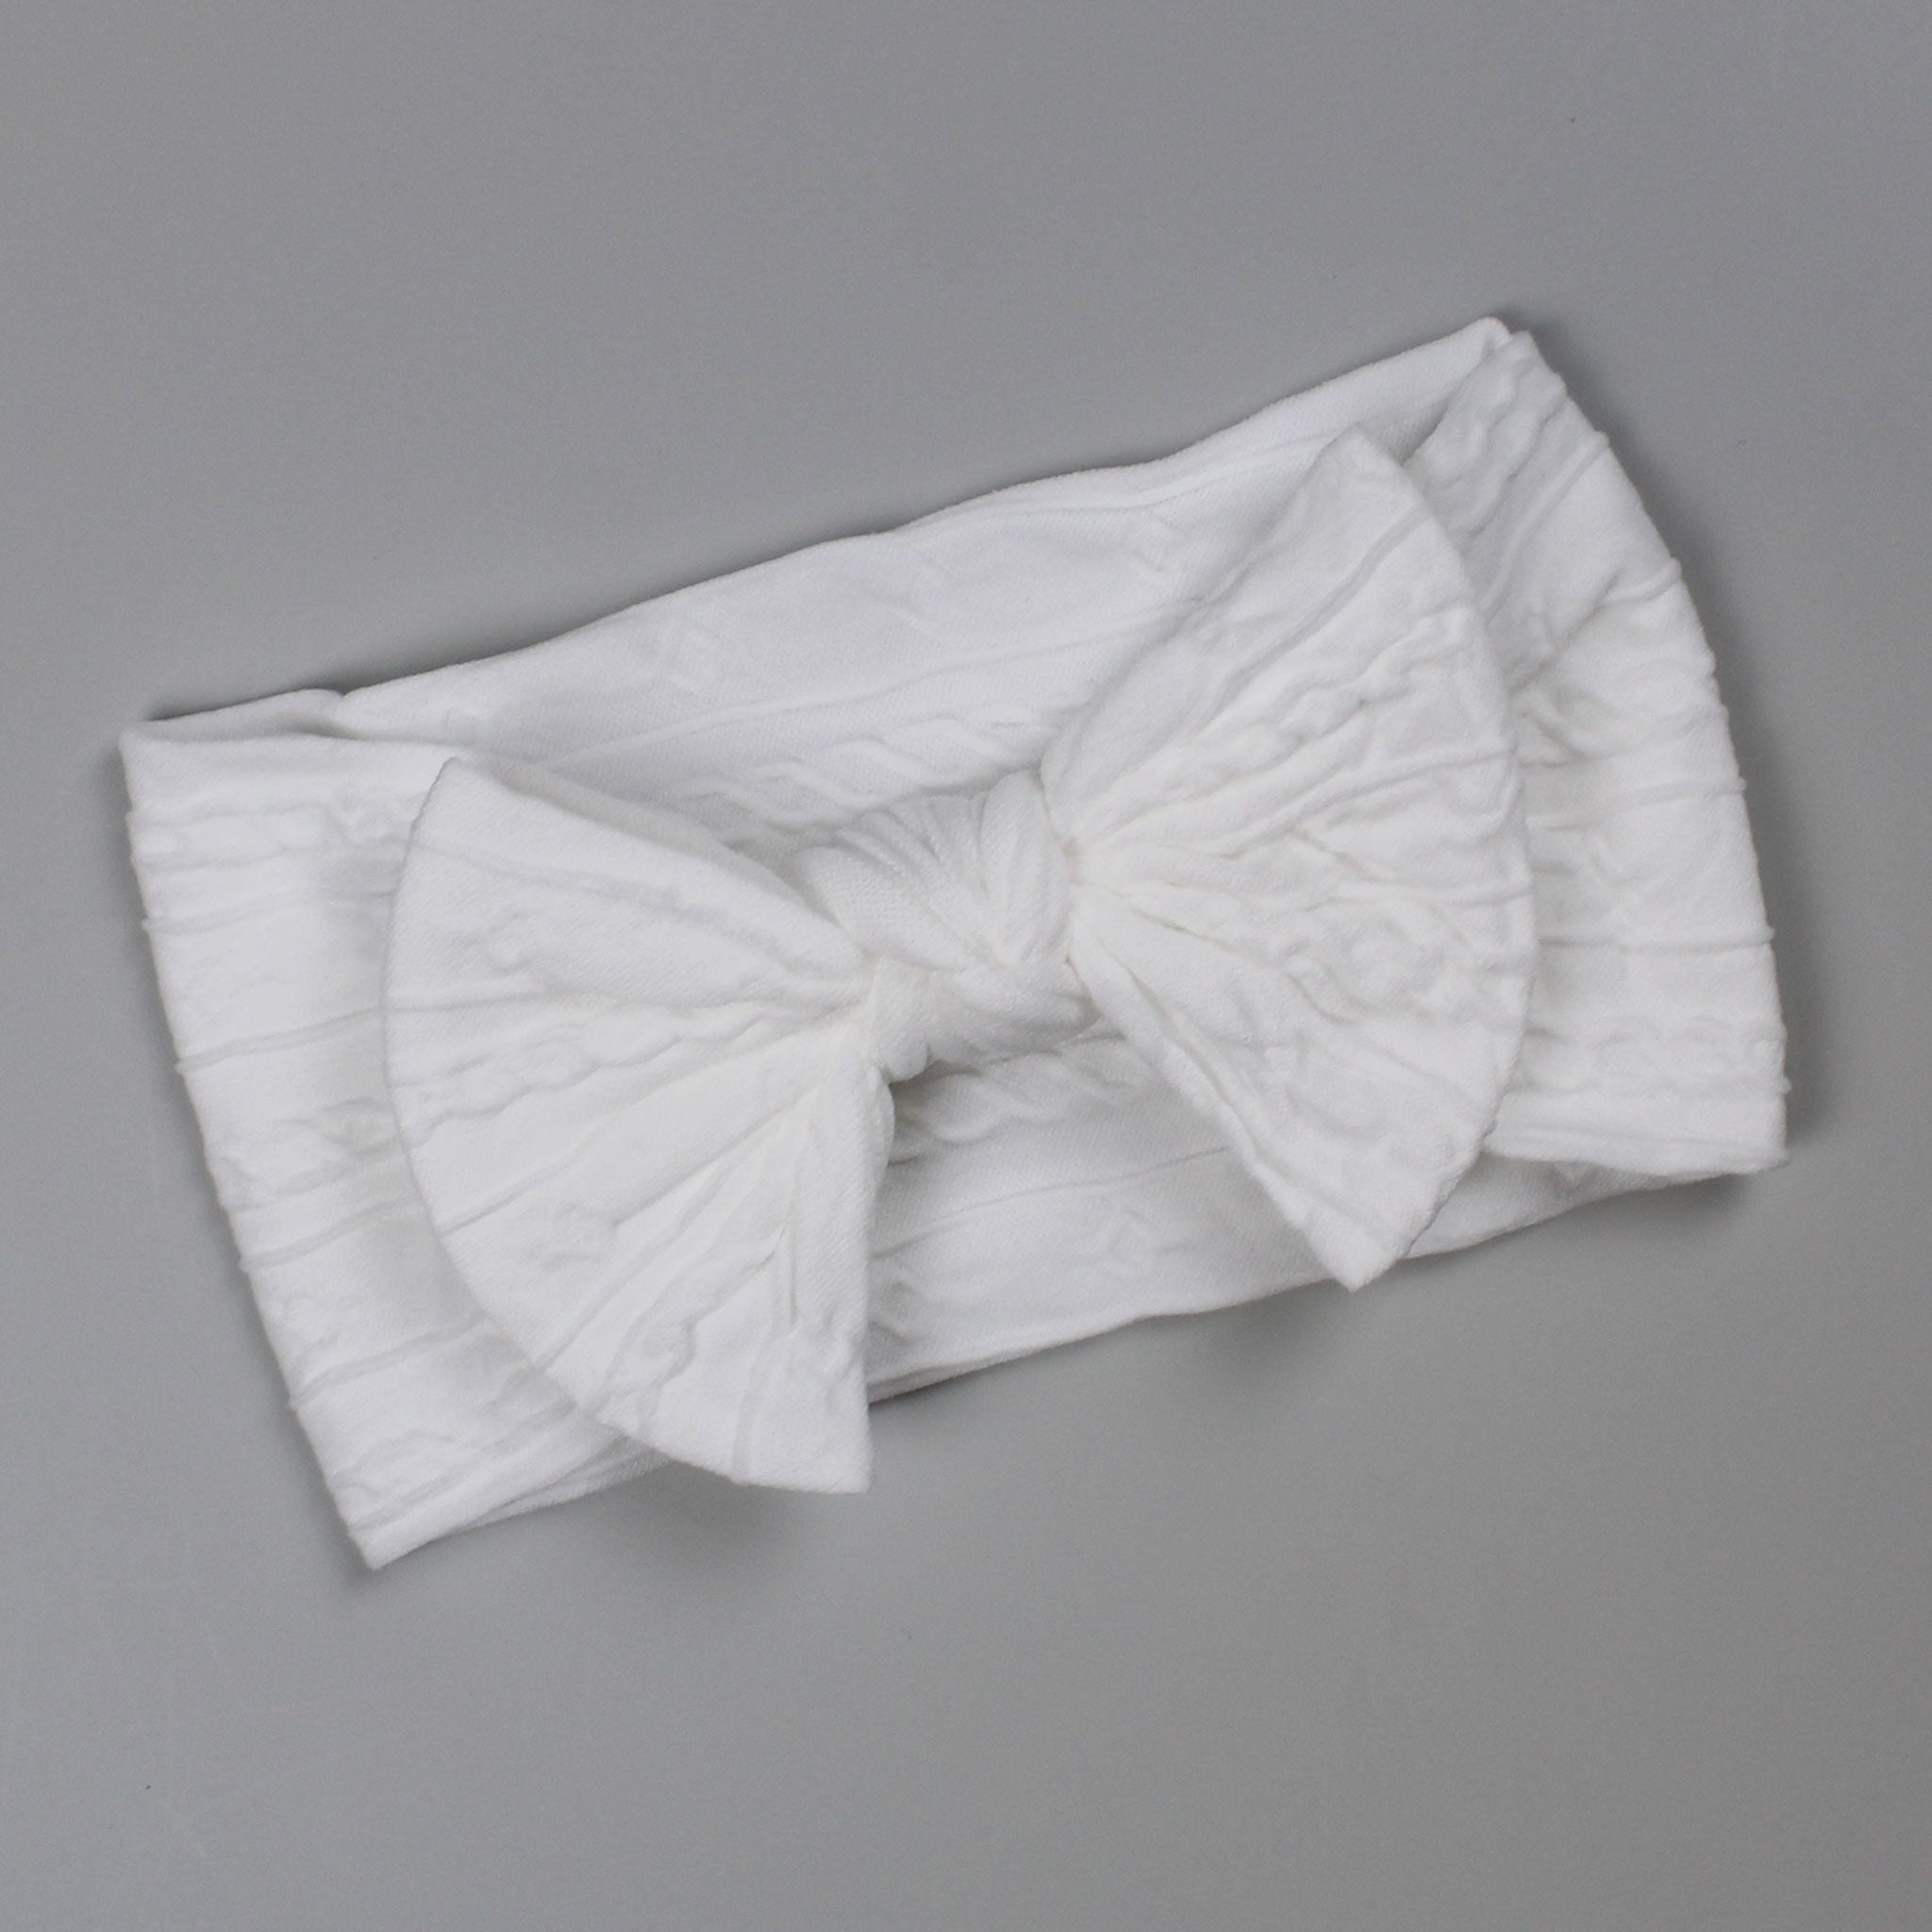 Baby headband with Large Bow  - White